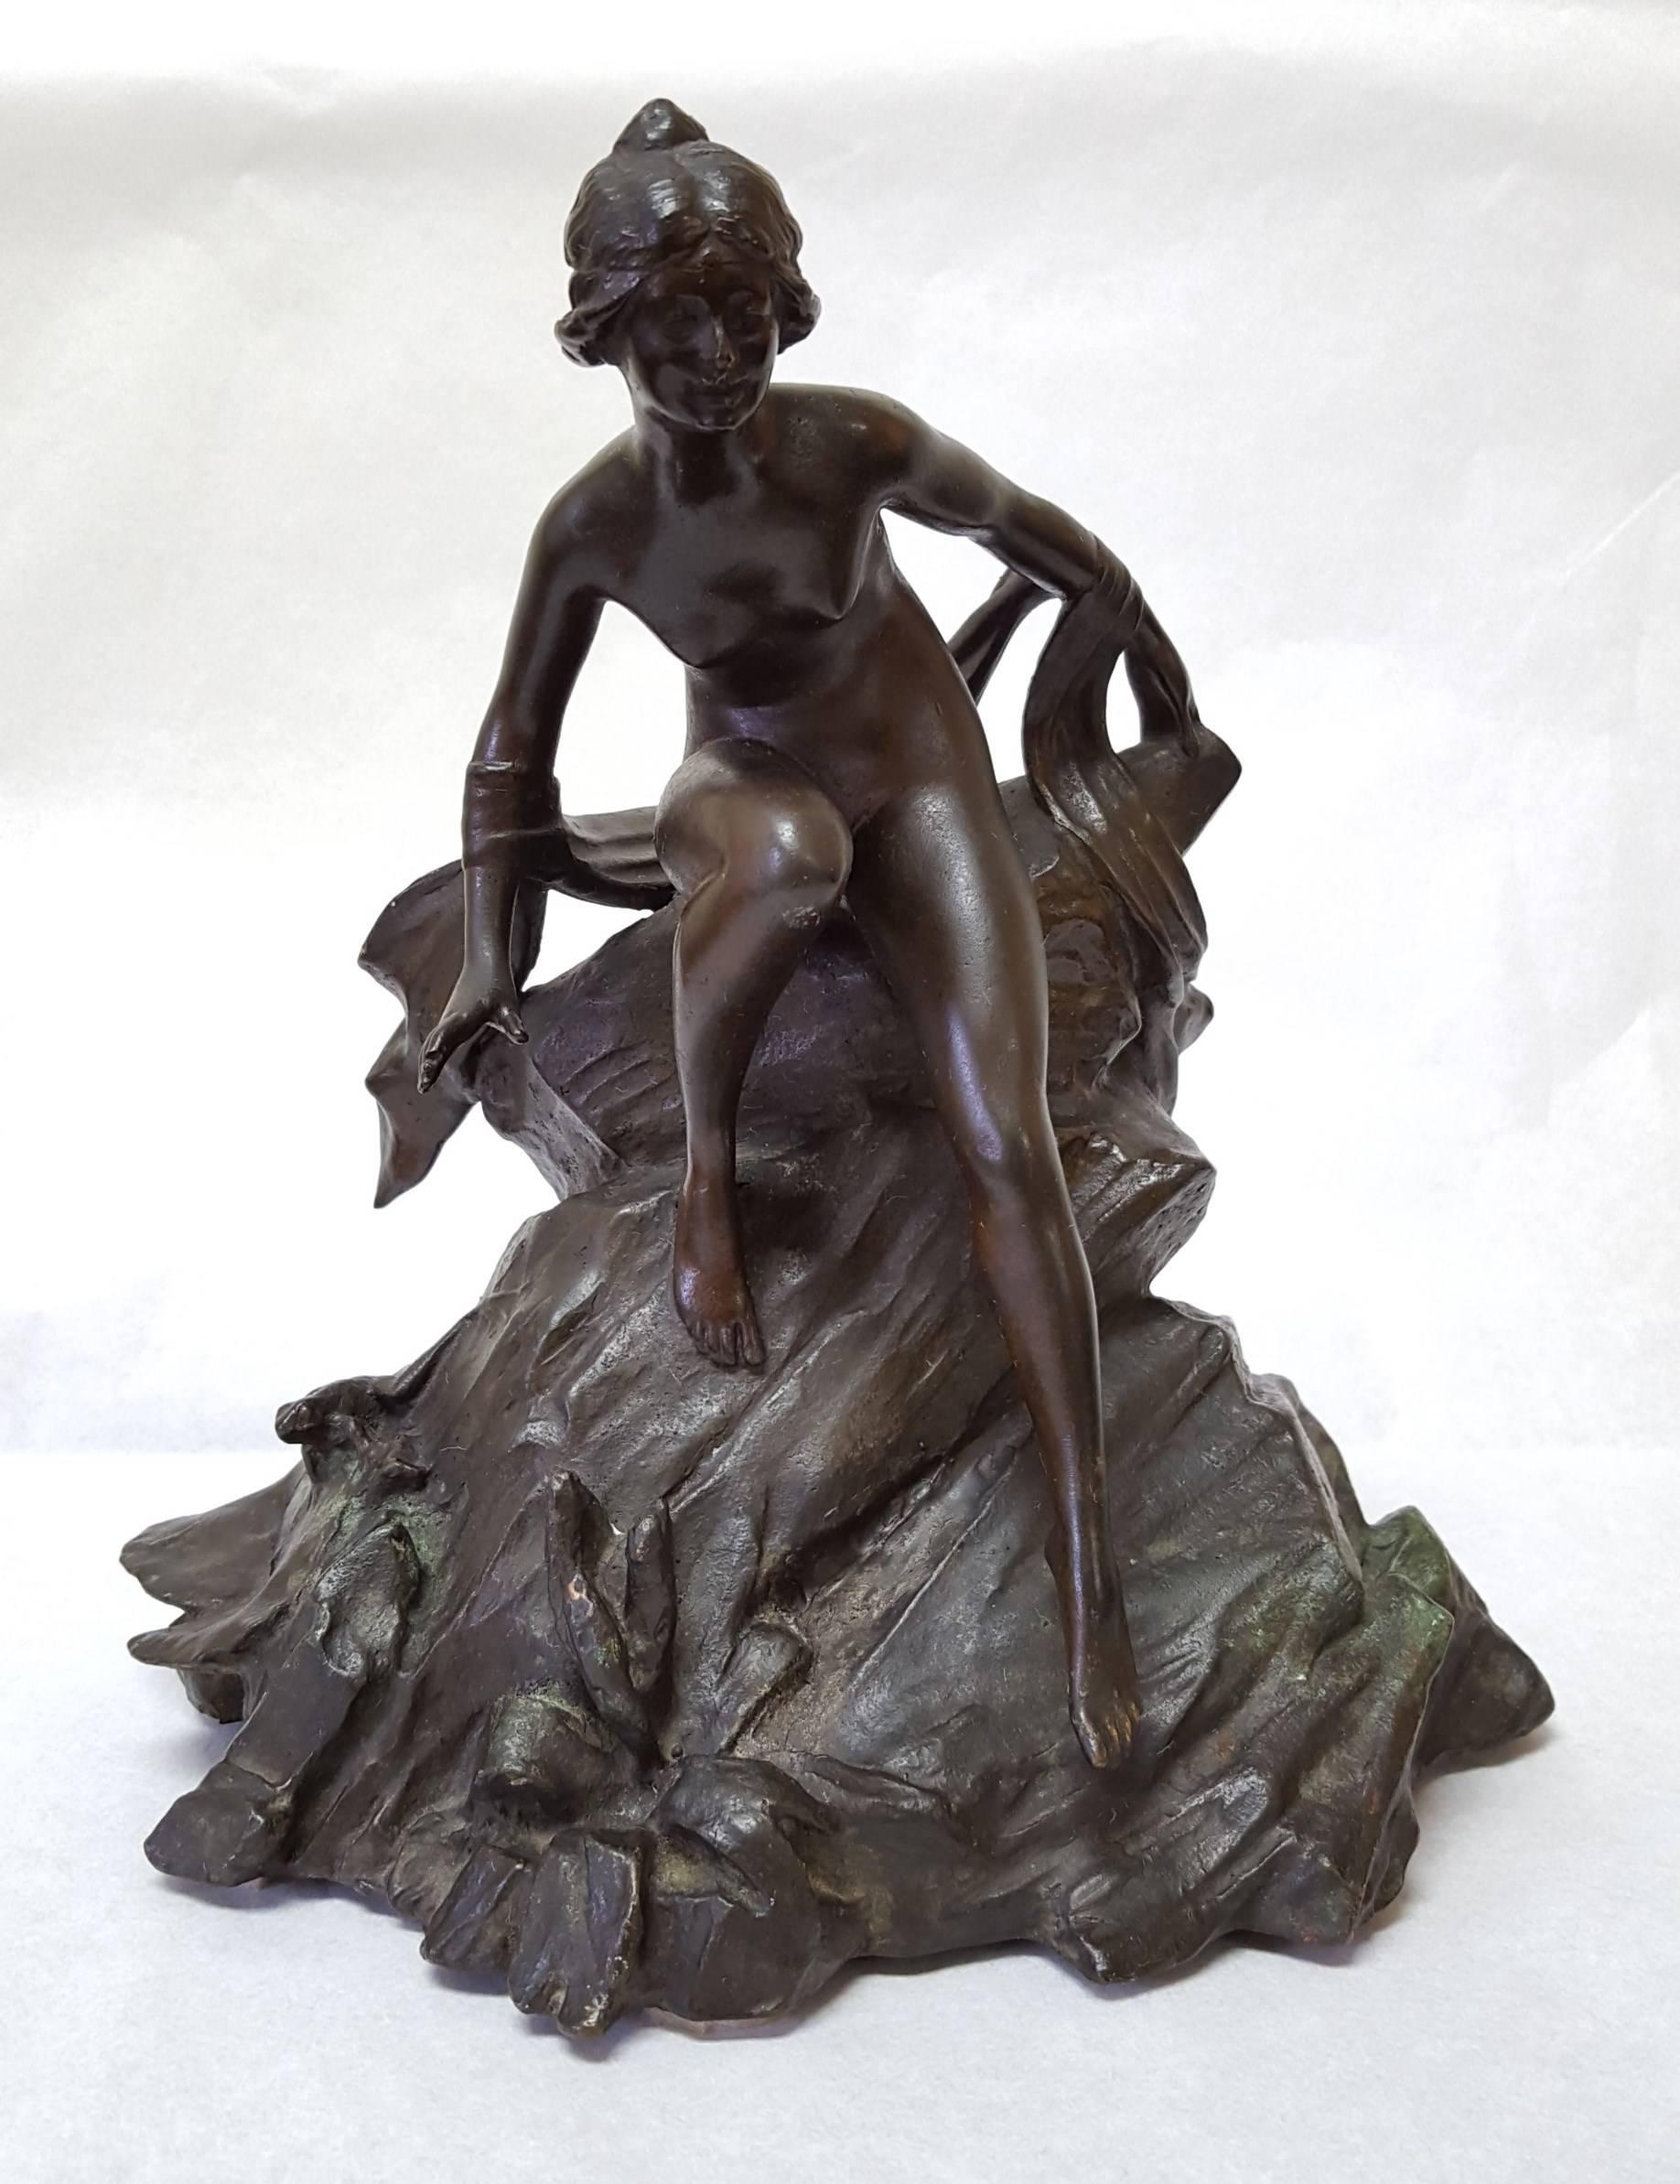 Unknown Nude Sculpture - "Water Nymph" Art Nouveau Bronze manner of Alphonse Mucha